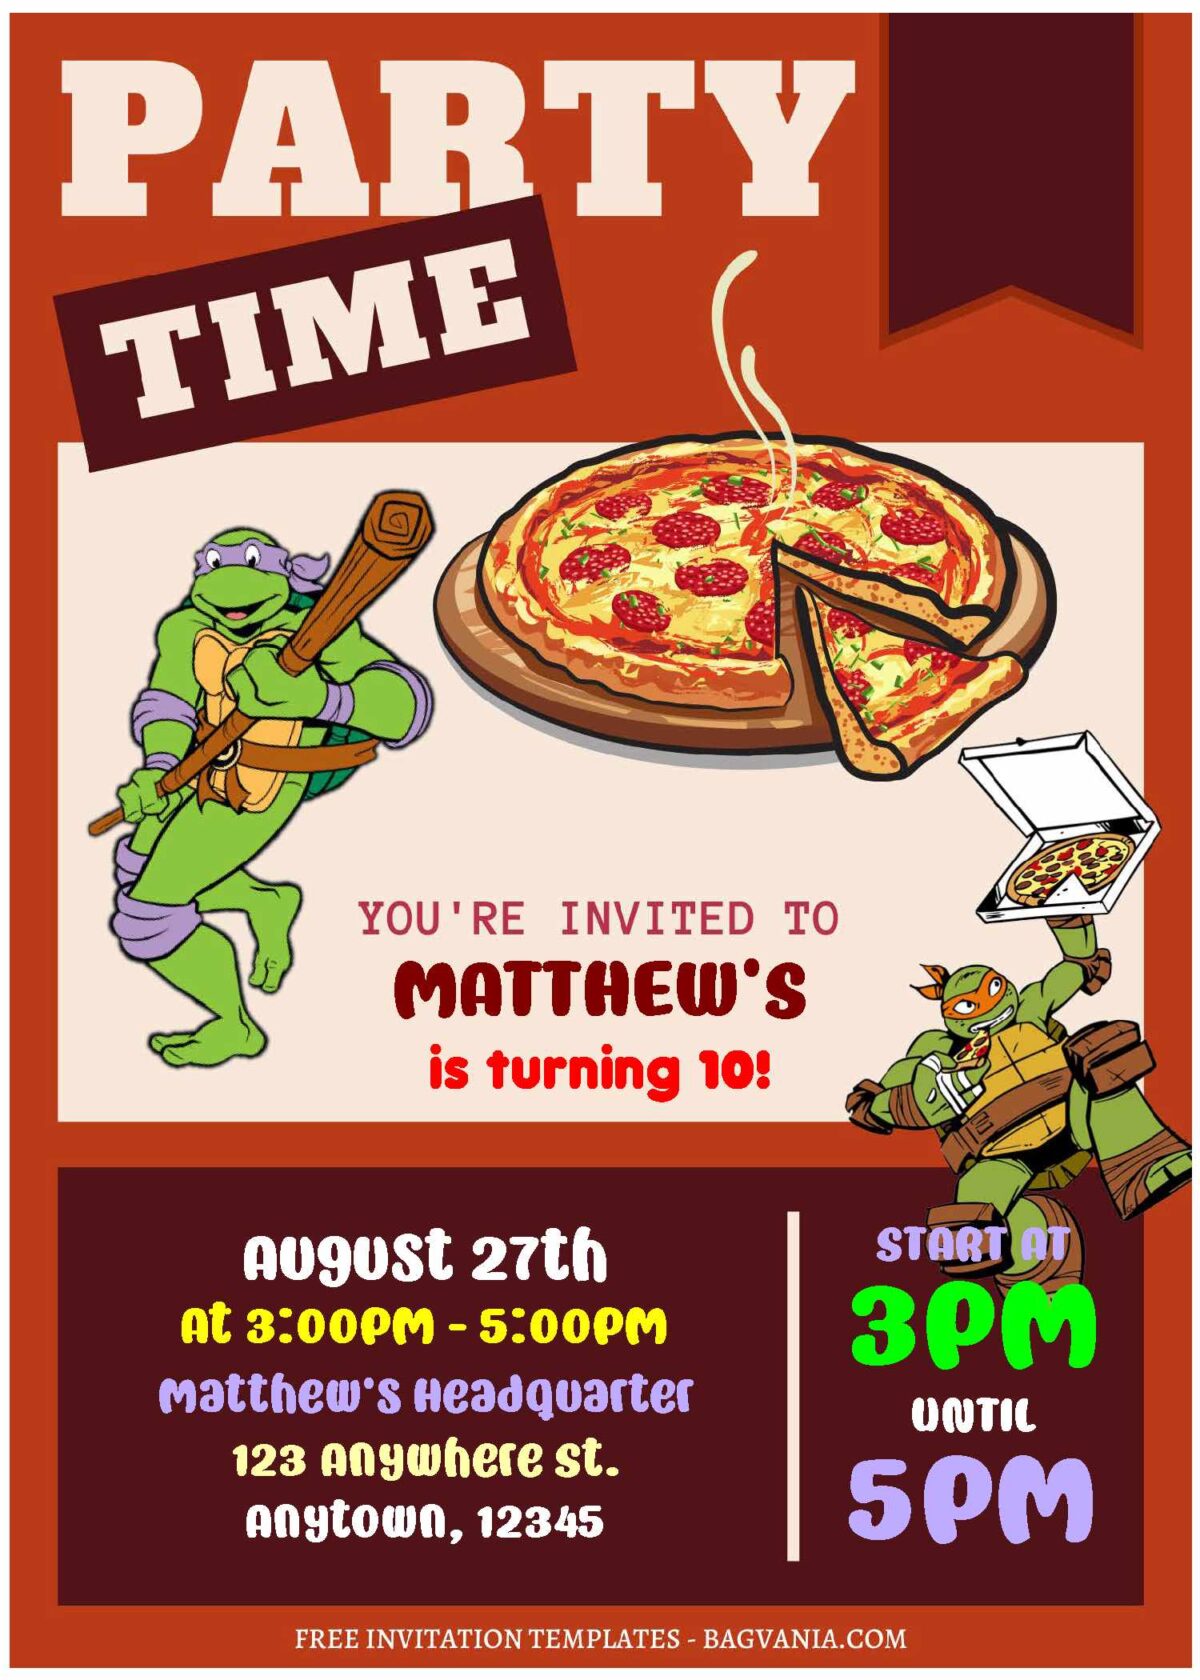 (Free Editable PDF) Fun TMNT Pizza Party Time Birthday Invitation Templates A